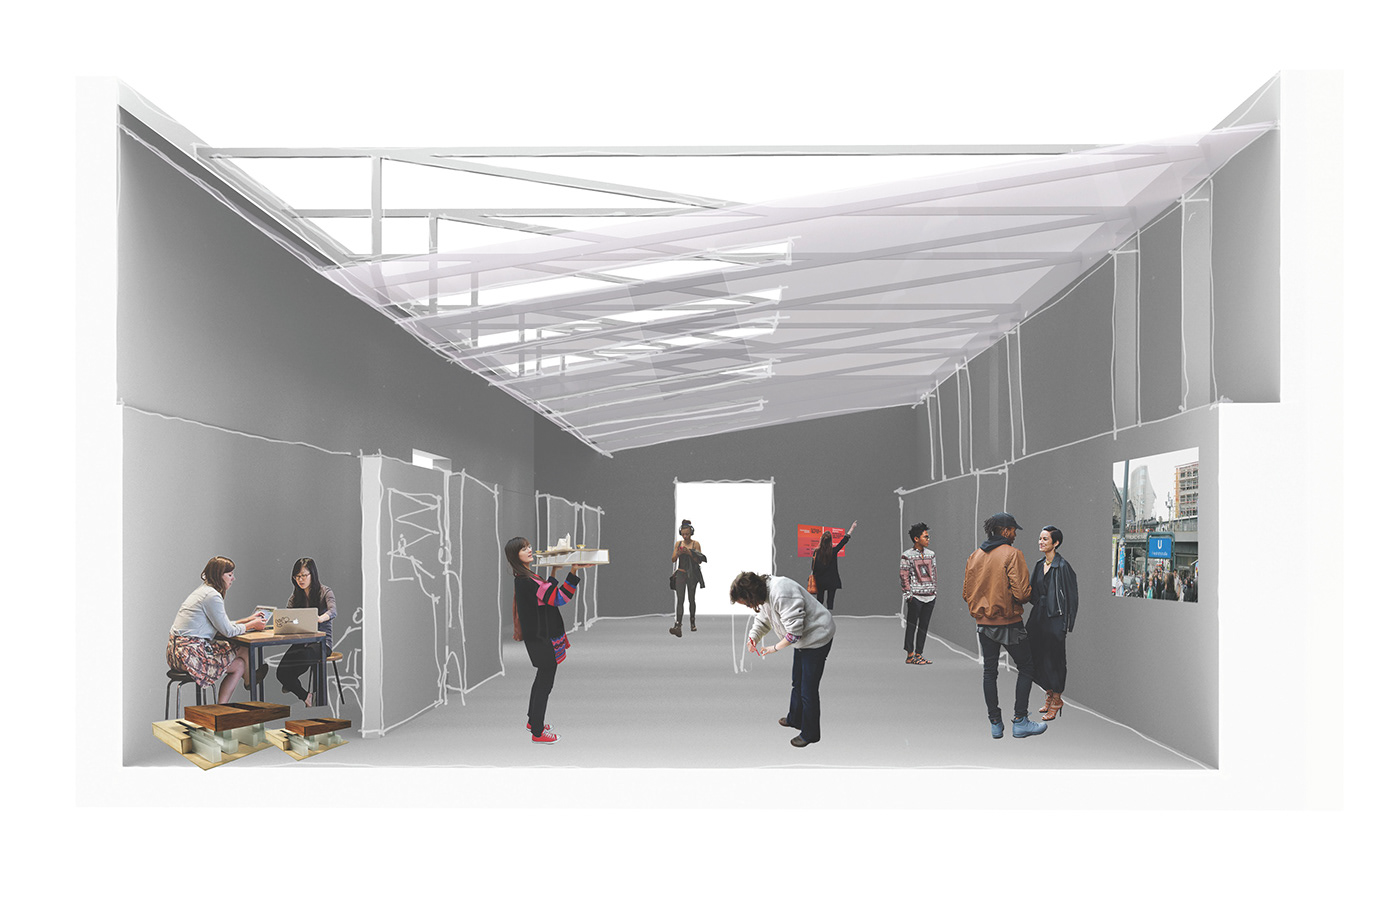 renovation rendering diagrams conceptual museum adaptive reuse Urban University academic design